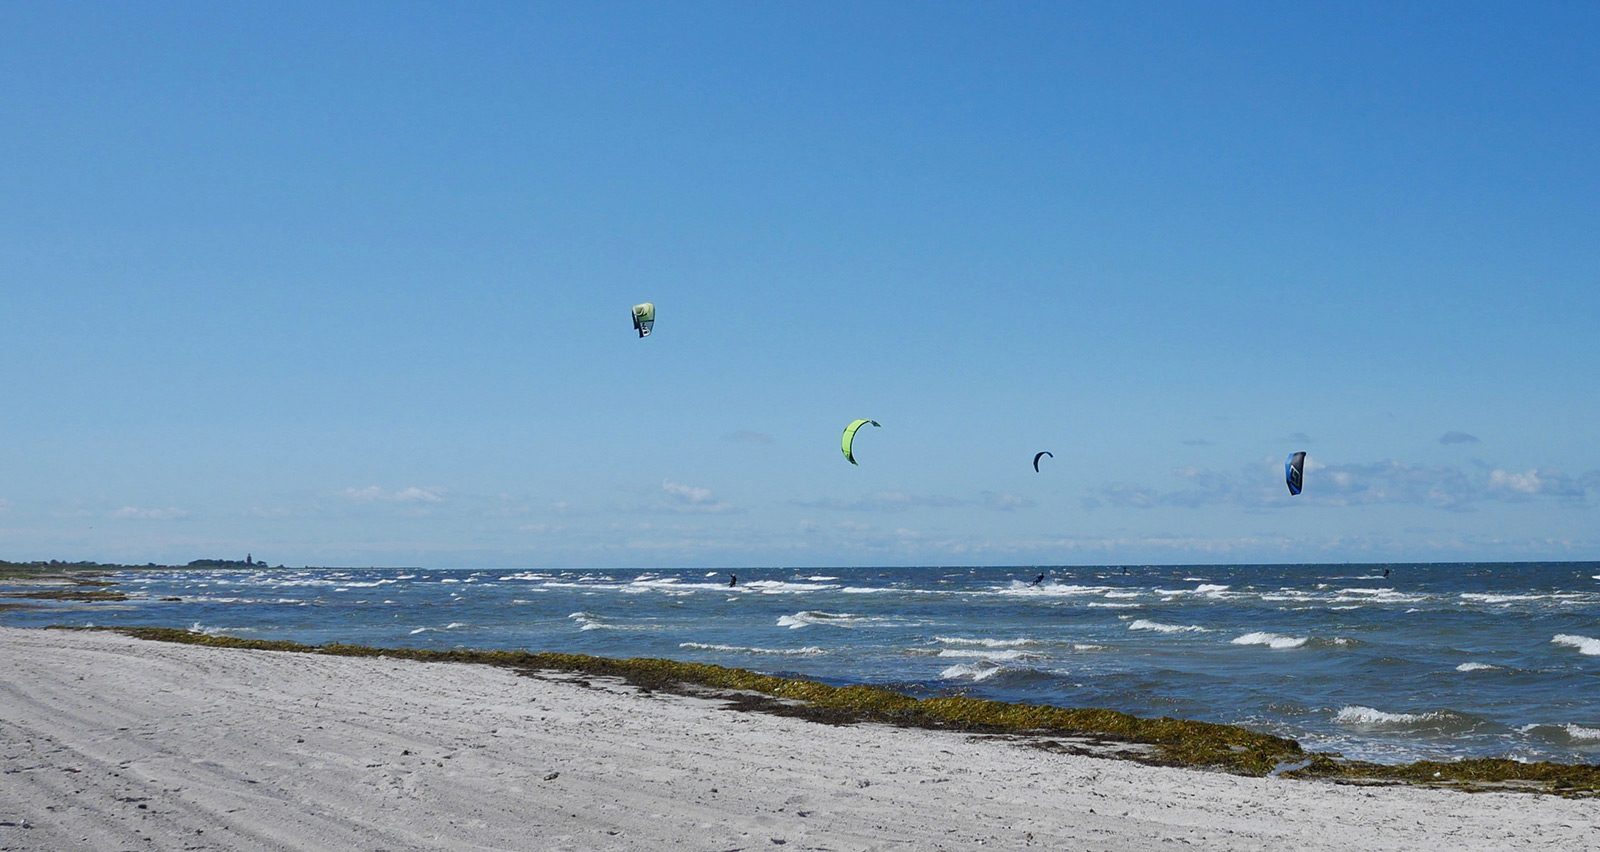 Skanor and kitesurfer on a sunny day.